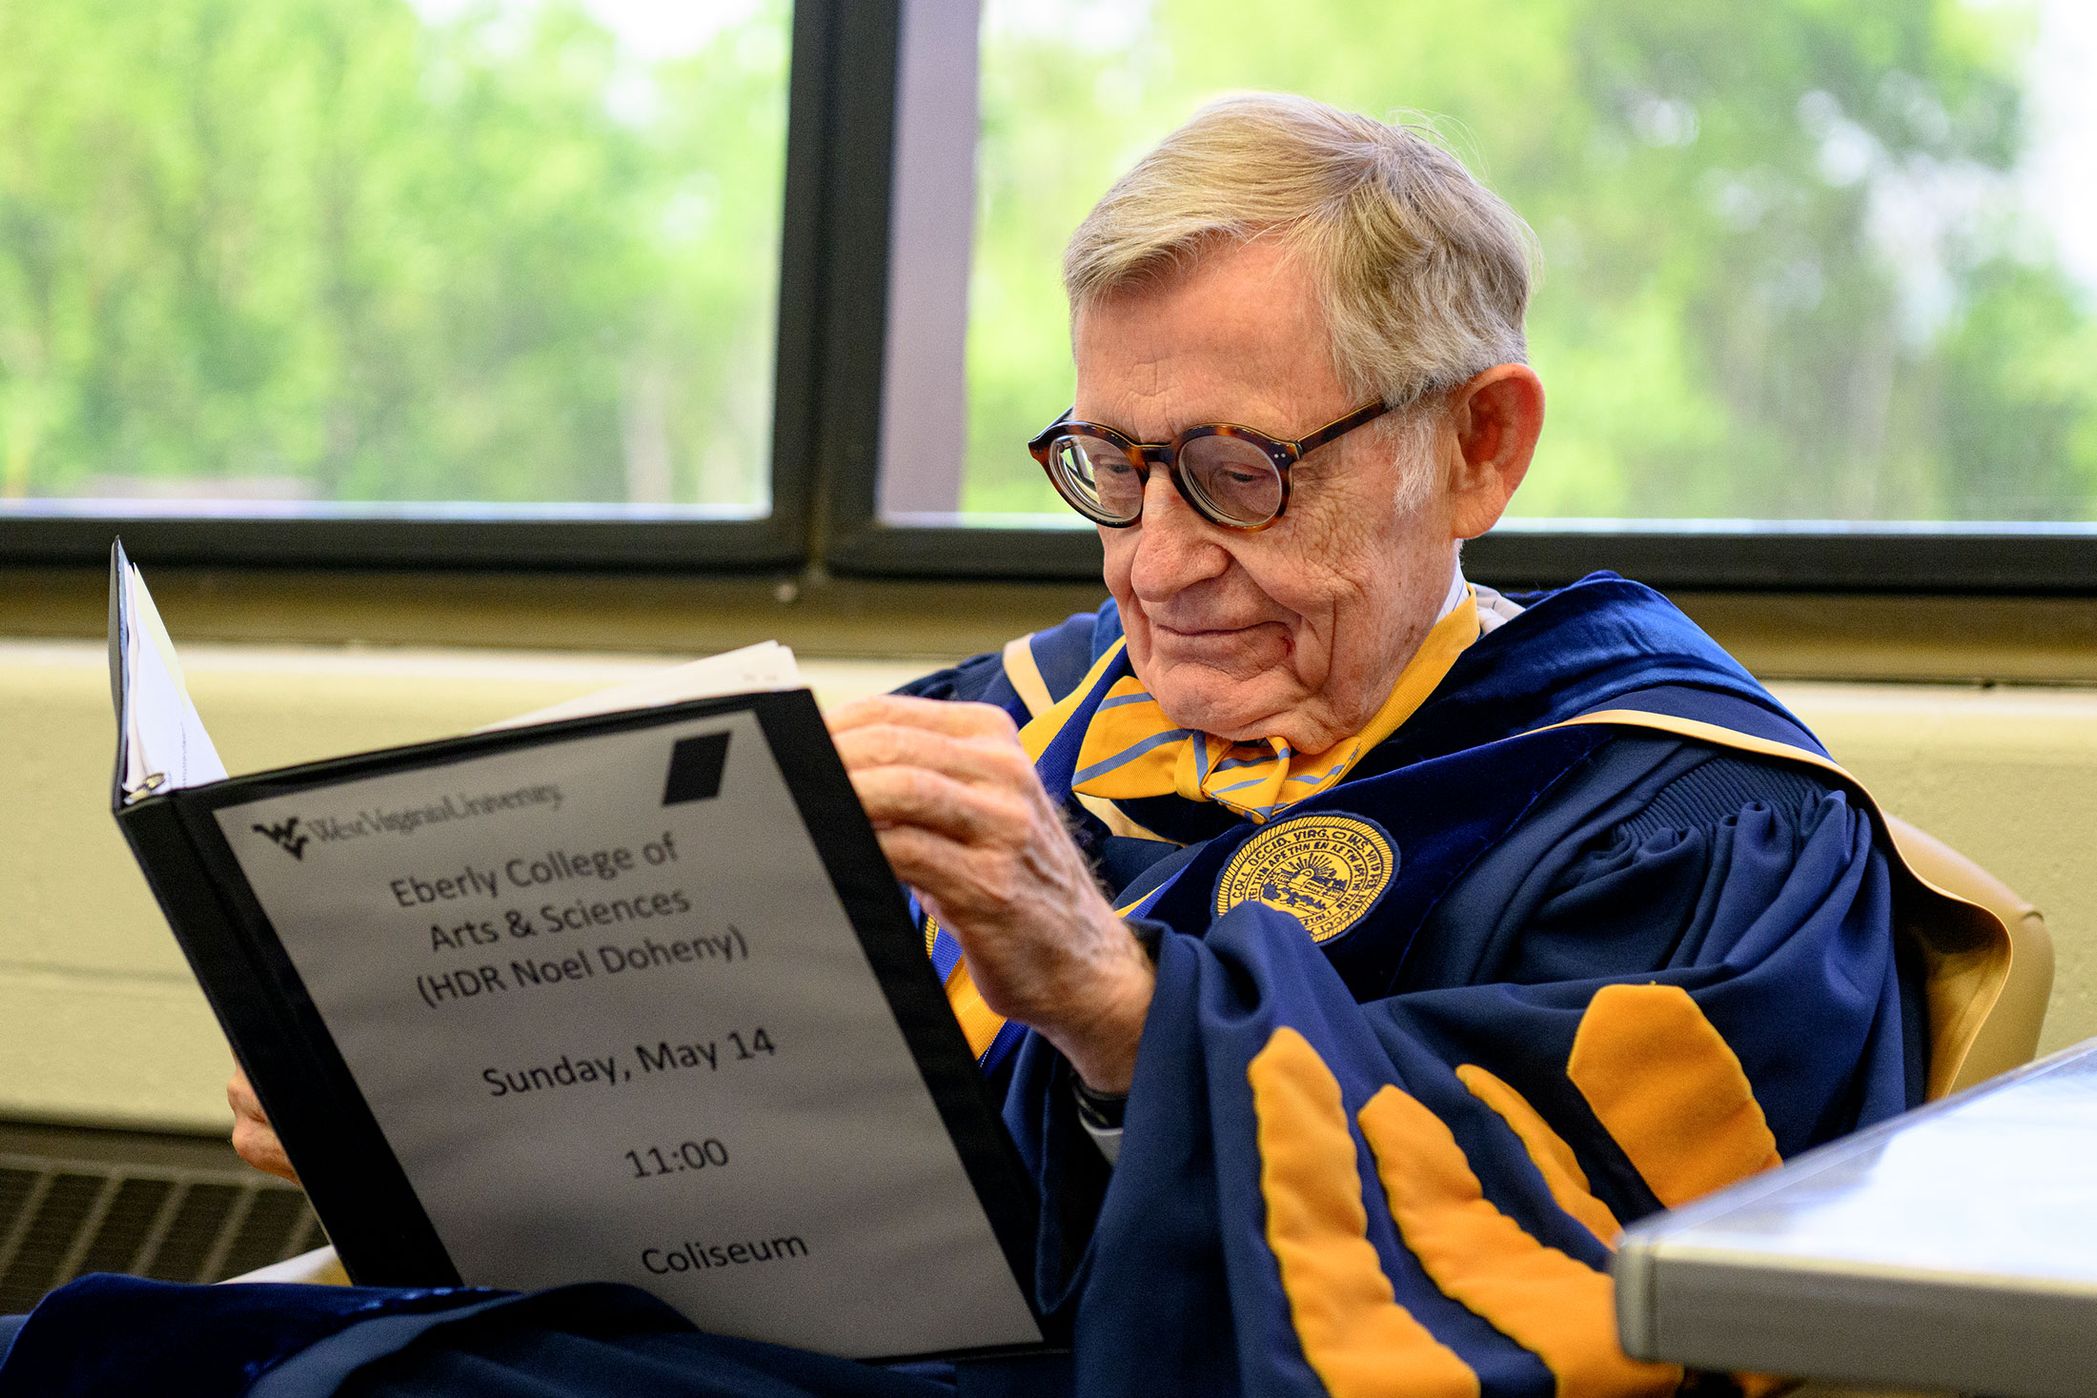 man in graduation regalia reads from folder